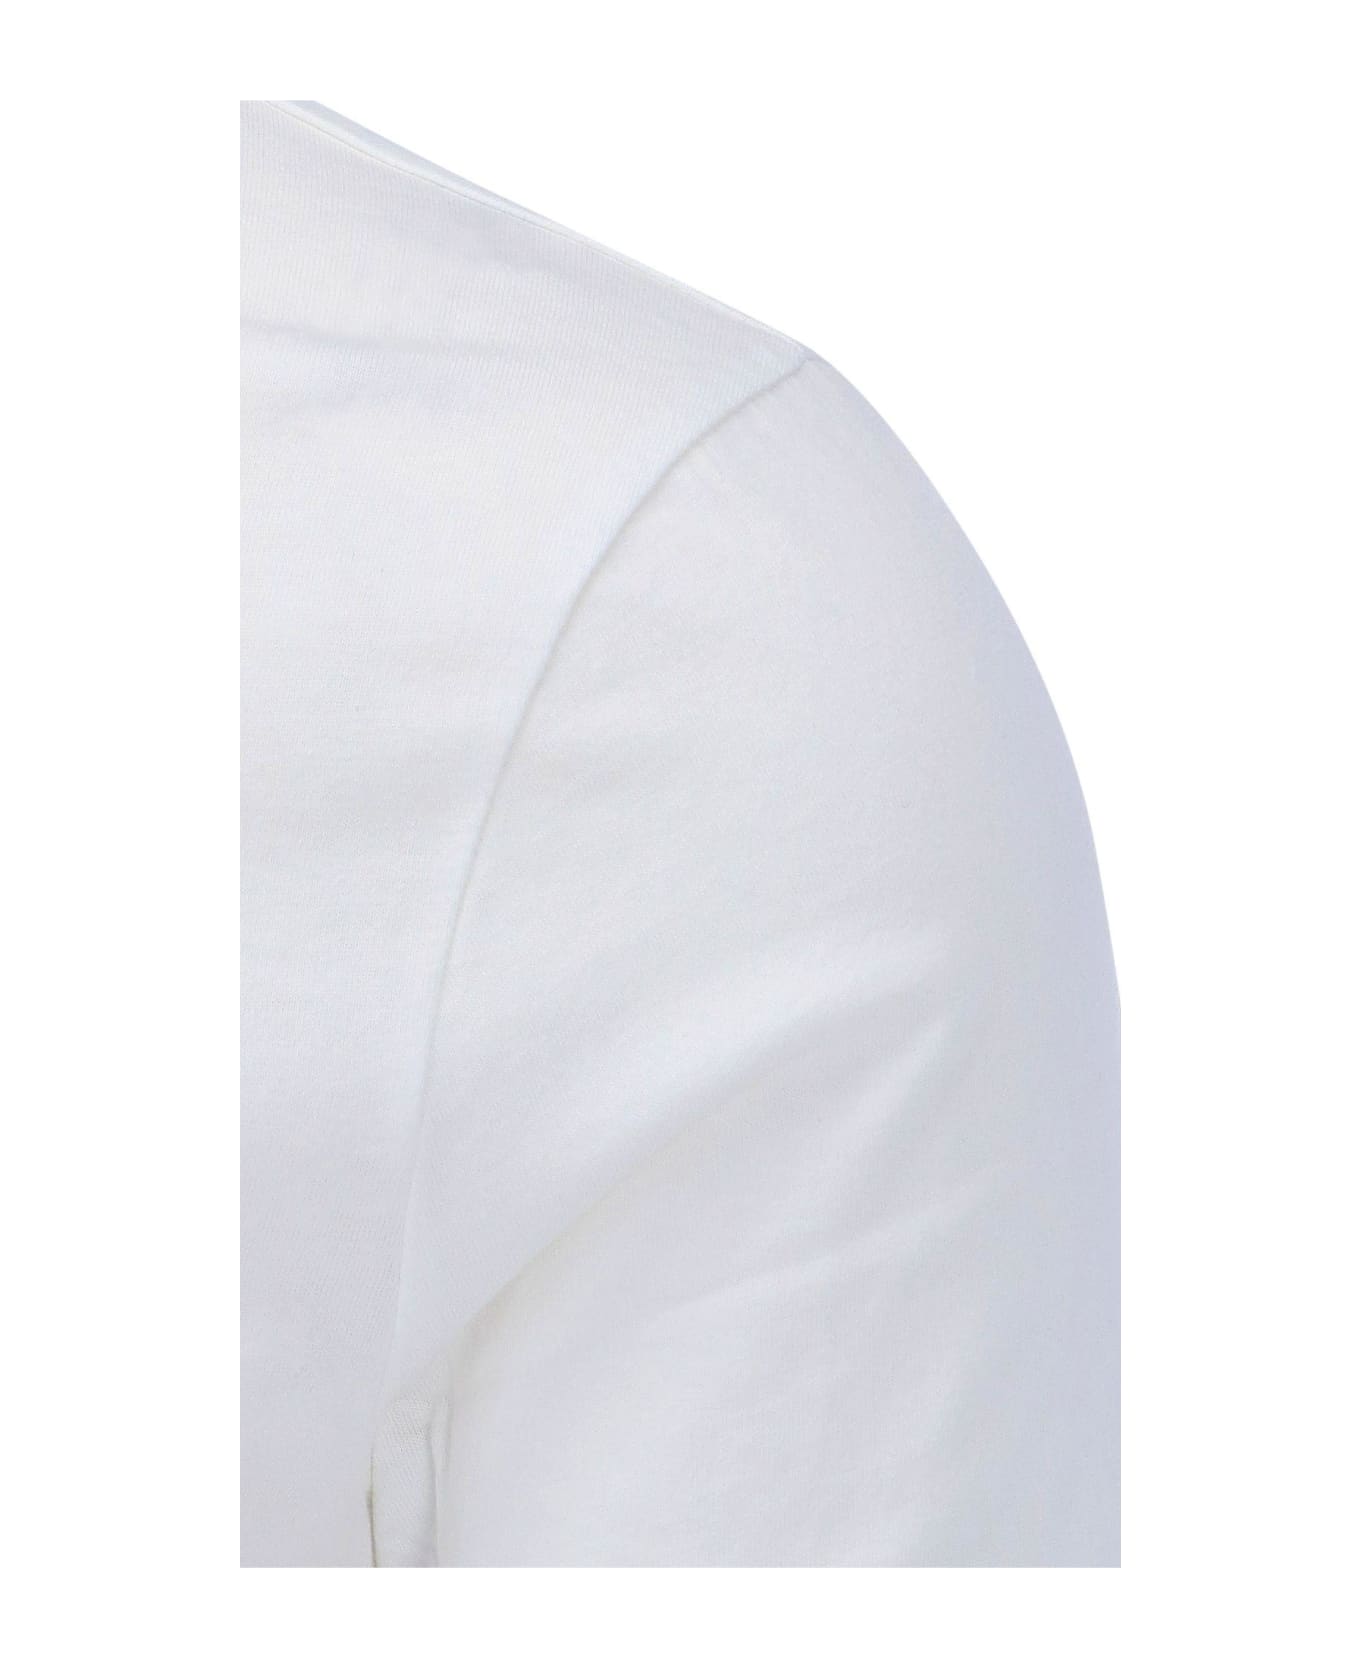 Polo Ralph Lauren Classic Logo T-shirt - White